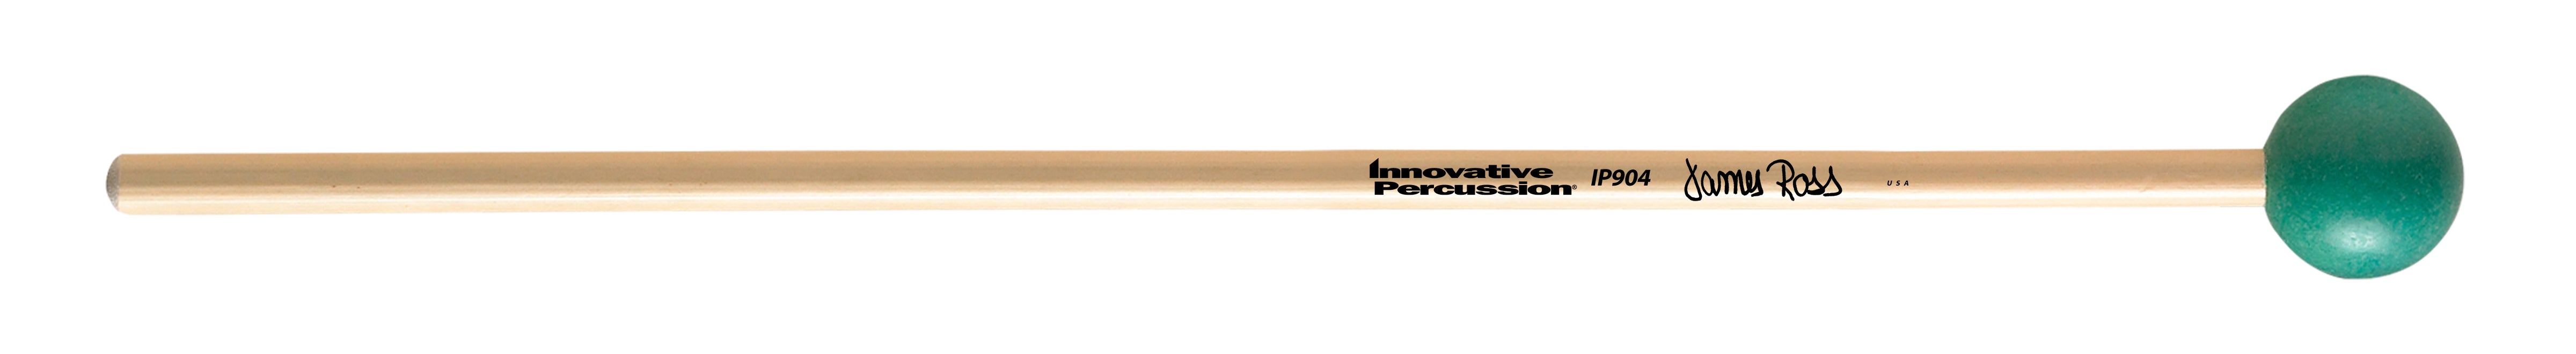 Innovative Percussion James Ross Series IP904 Mallets 琴棍,, 橡膠頭, 藤製手柄